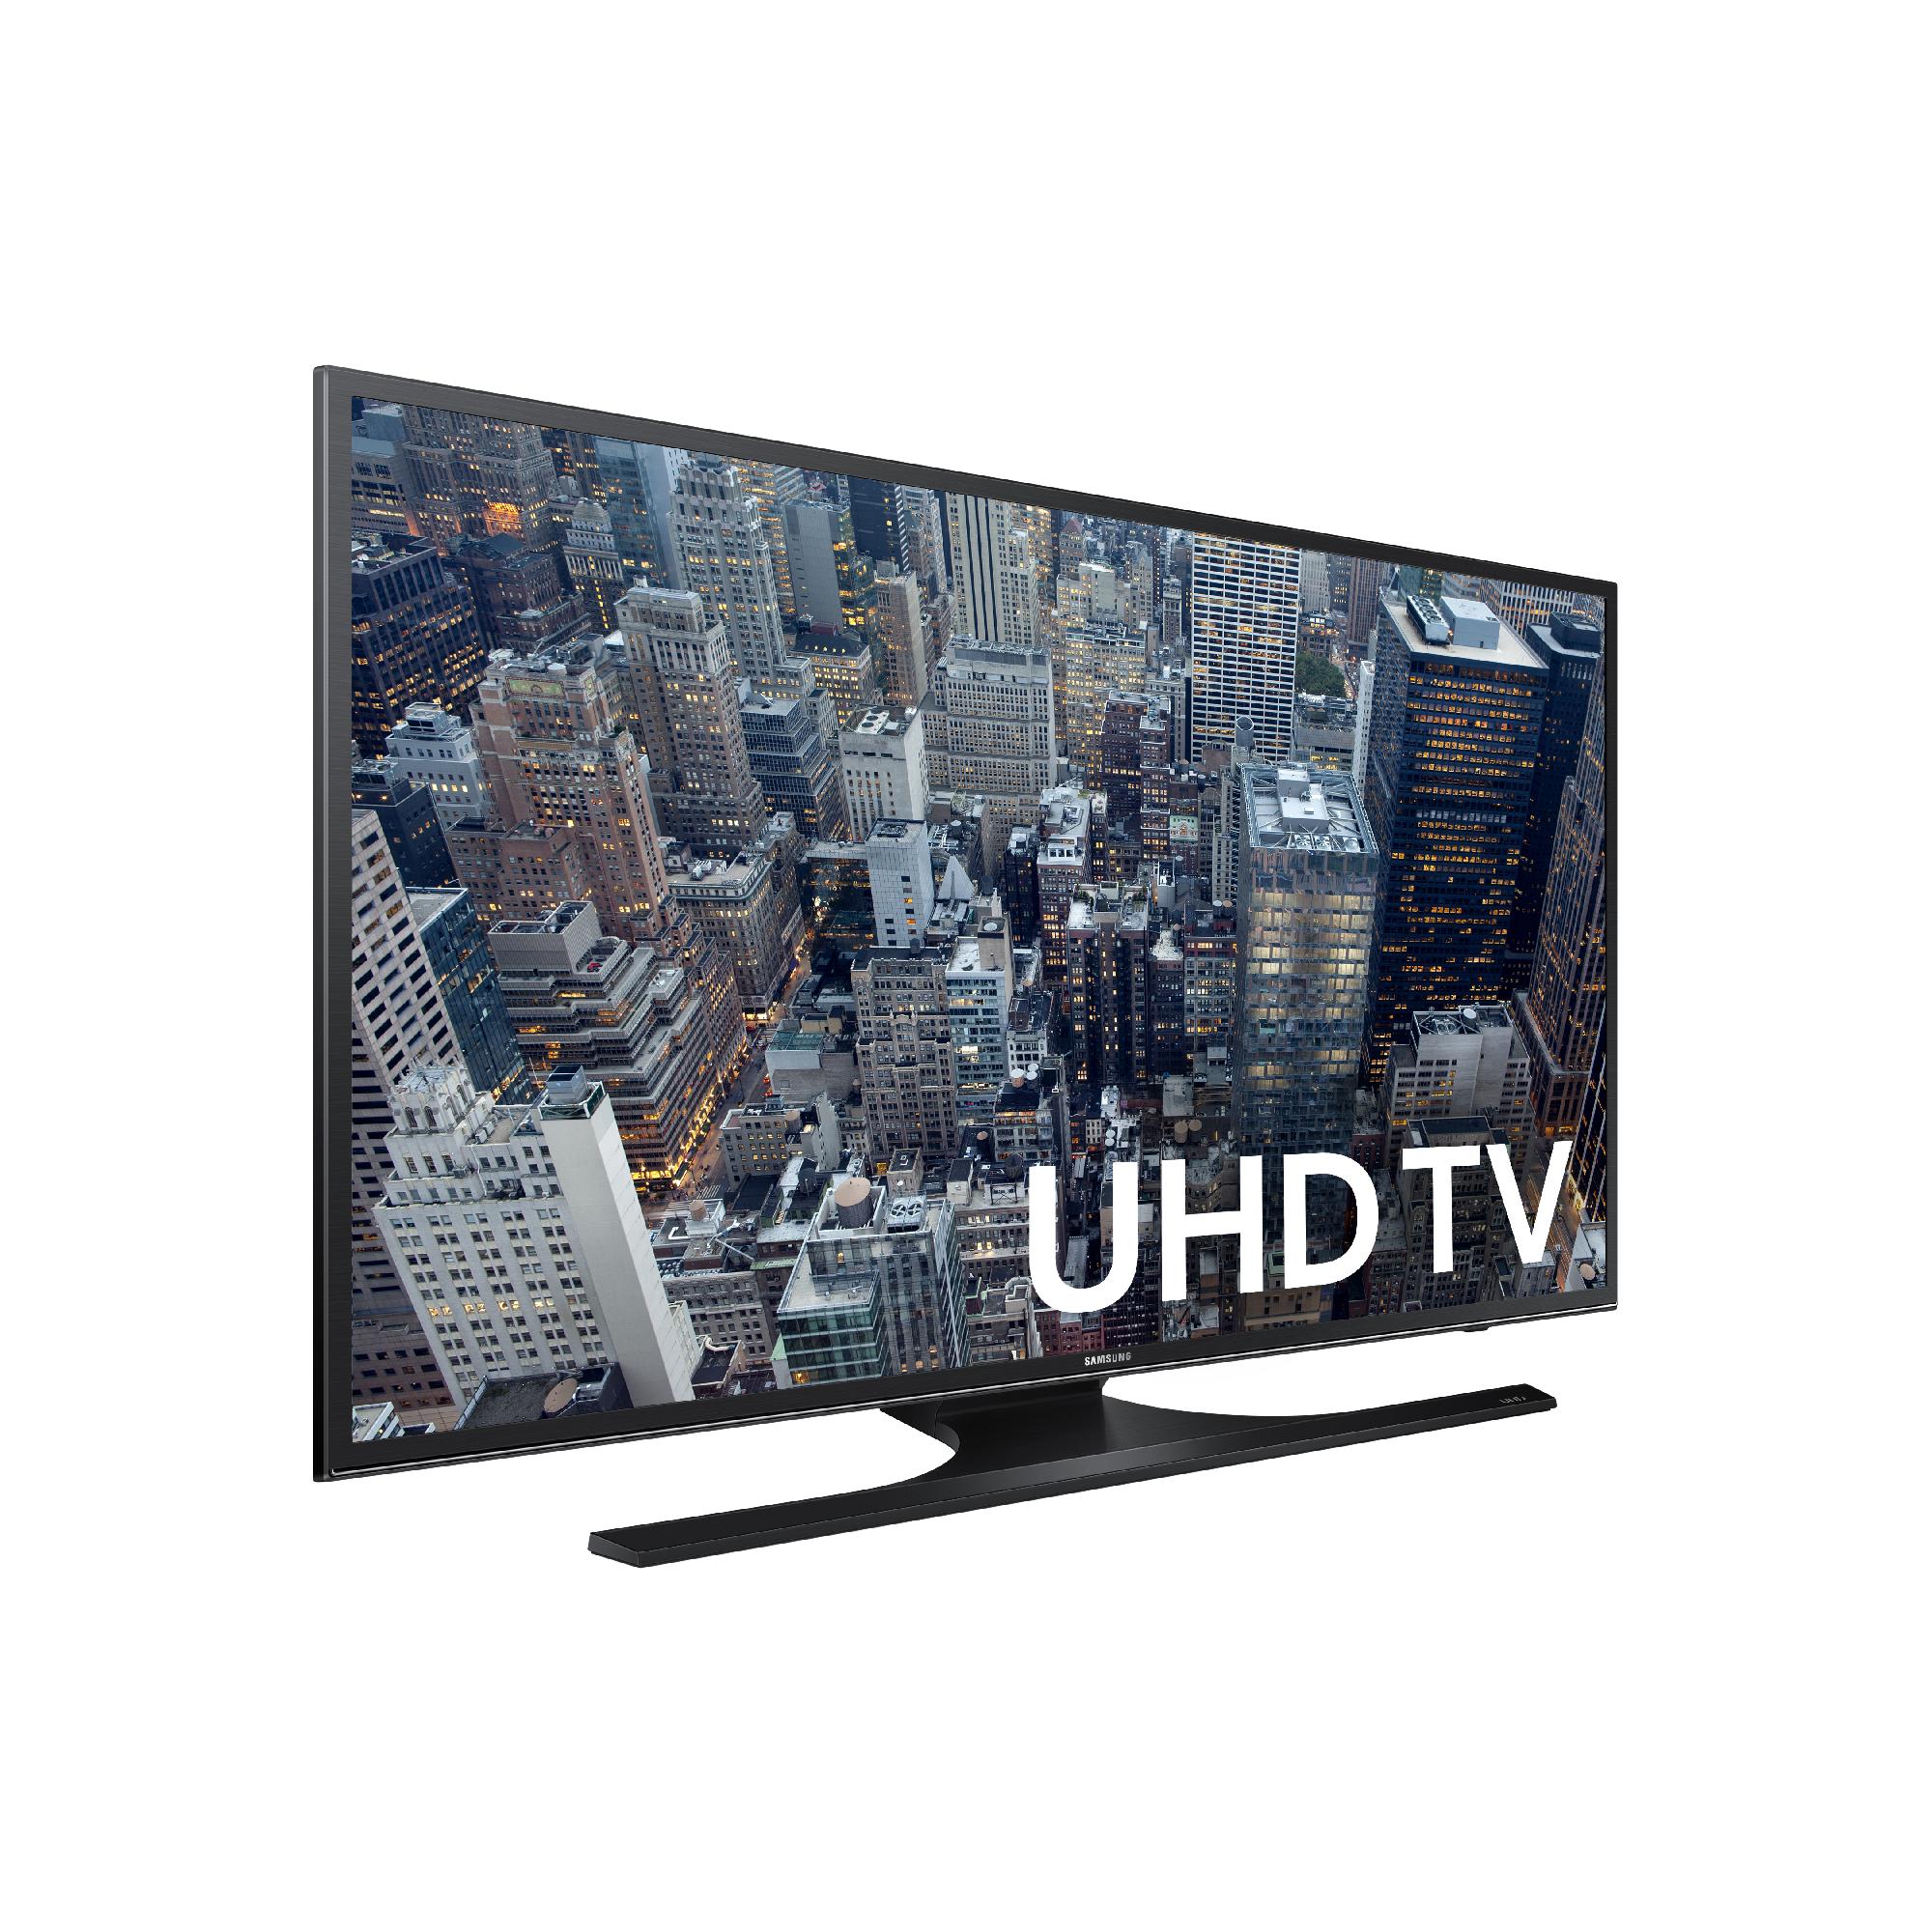 Samsung UN55JU6500 55" 4K Ultra HD 2160p 60Hz LED Smart HDTV (4K x 2K) - Qualifies for Premium Delivery - image 5 of 10